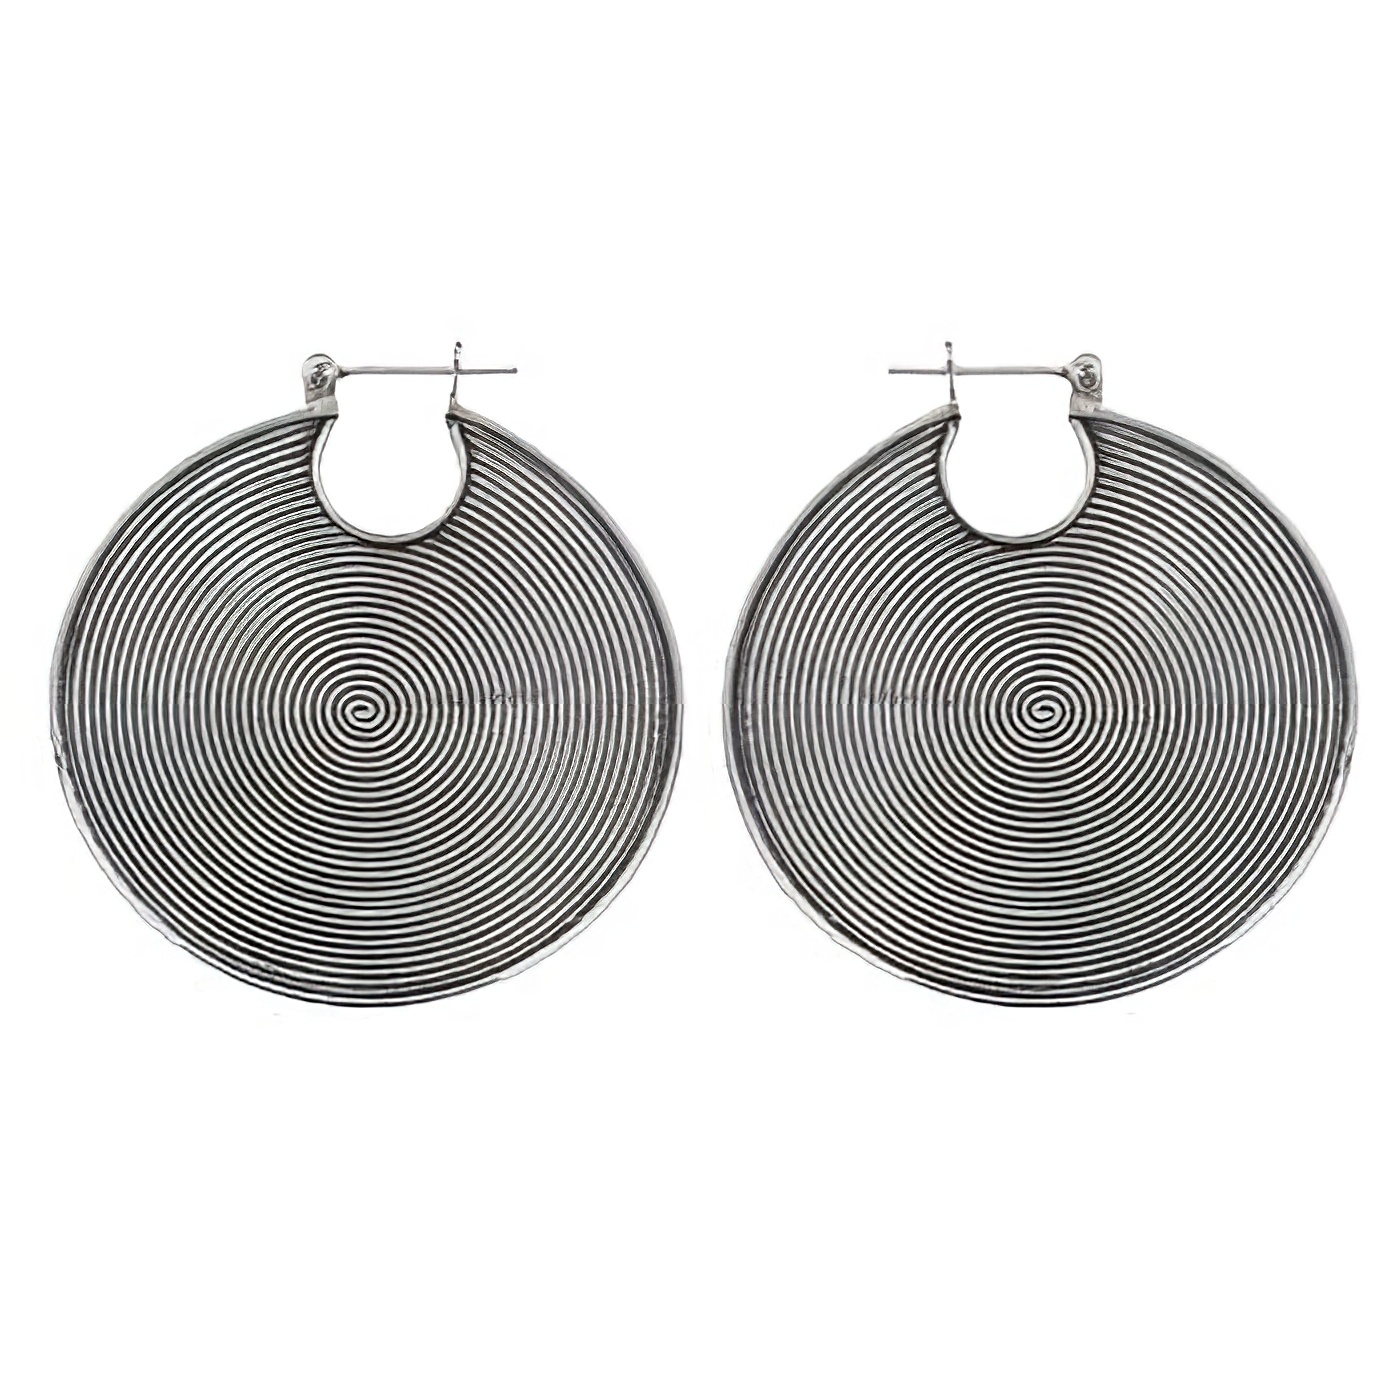 Spiral Hoops 36MM 925 Silver Earrings by BeYindi 